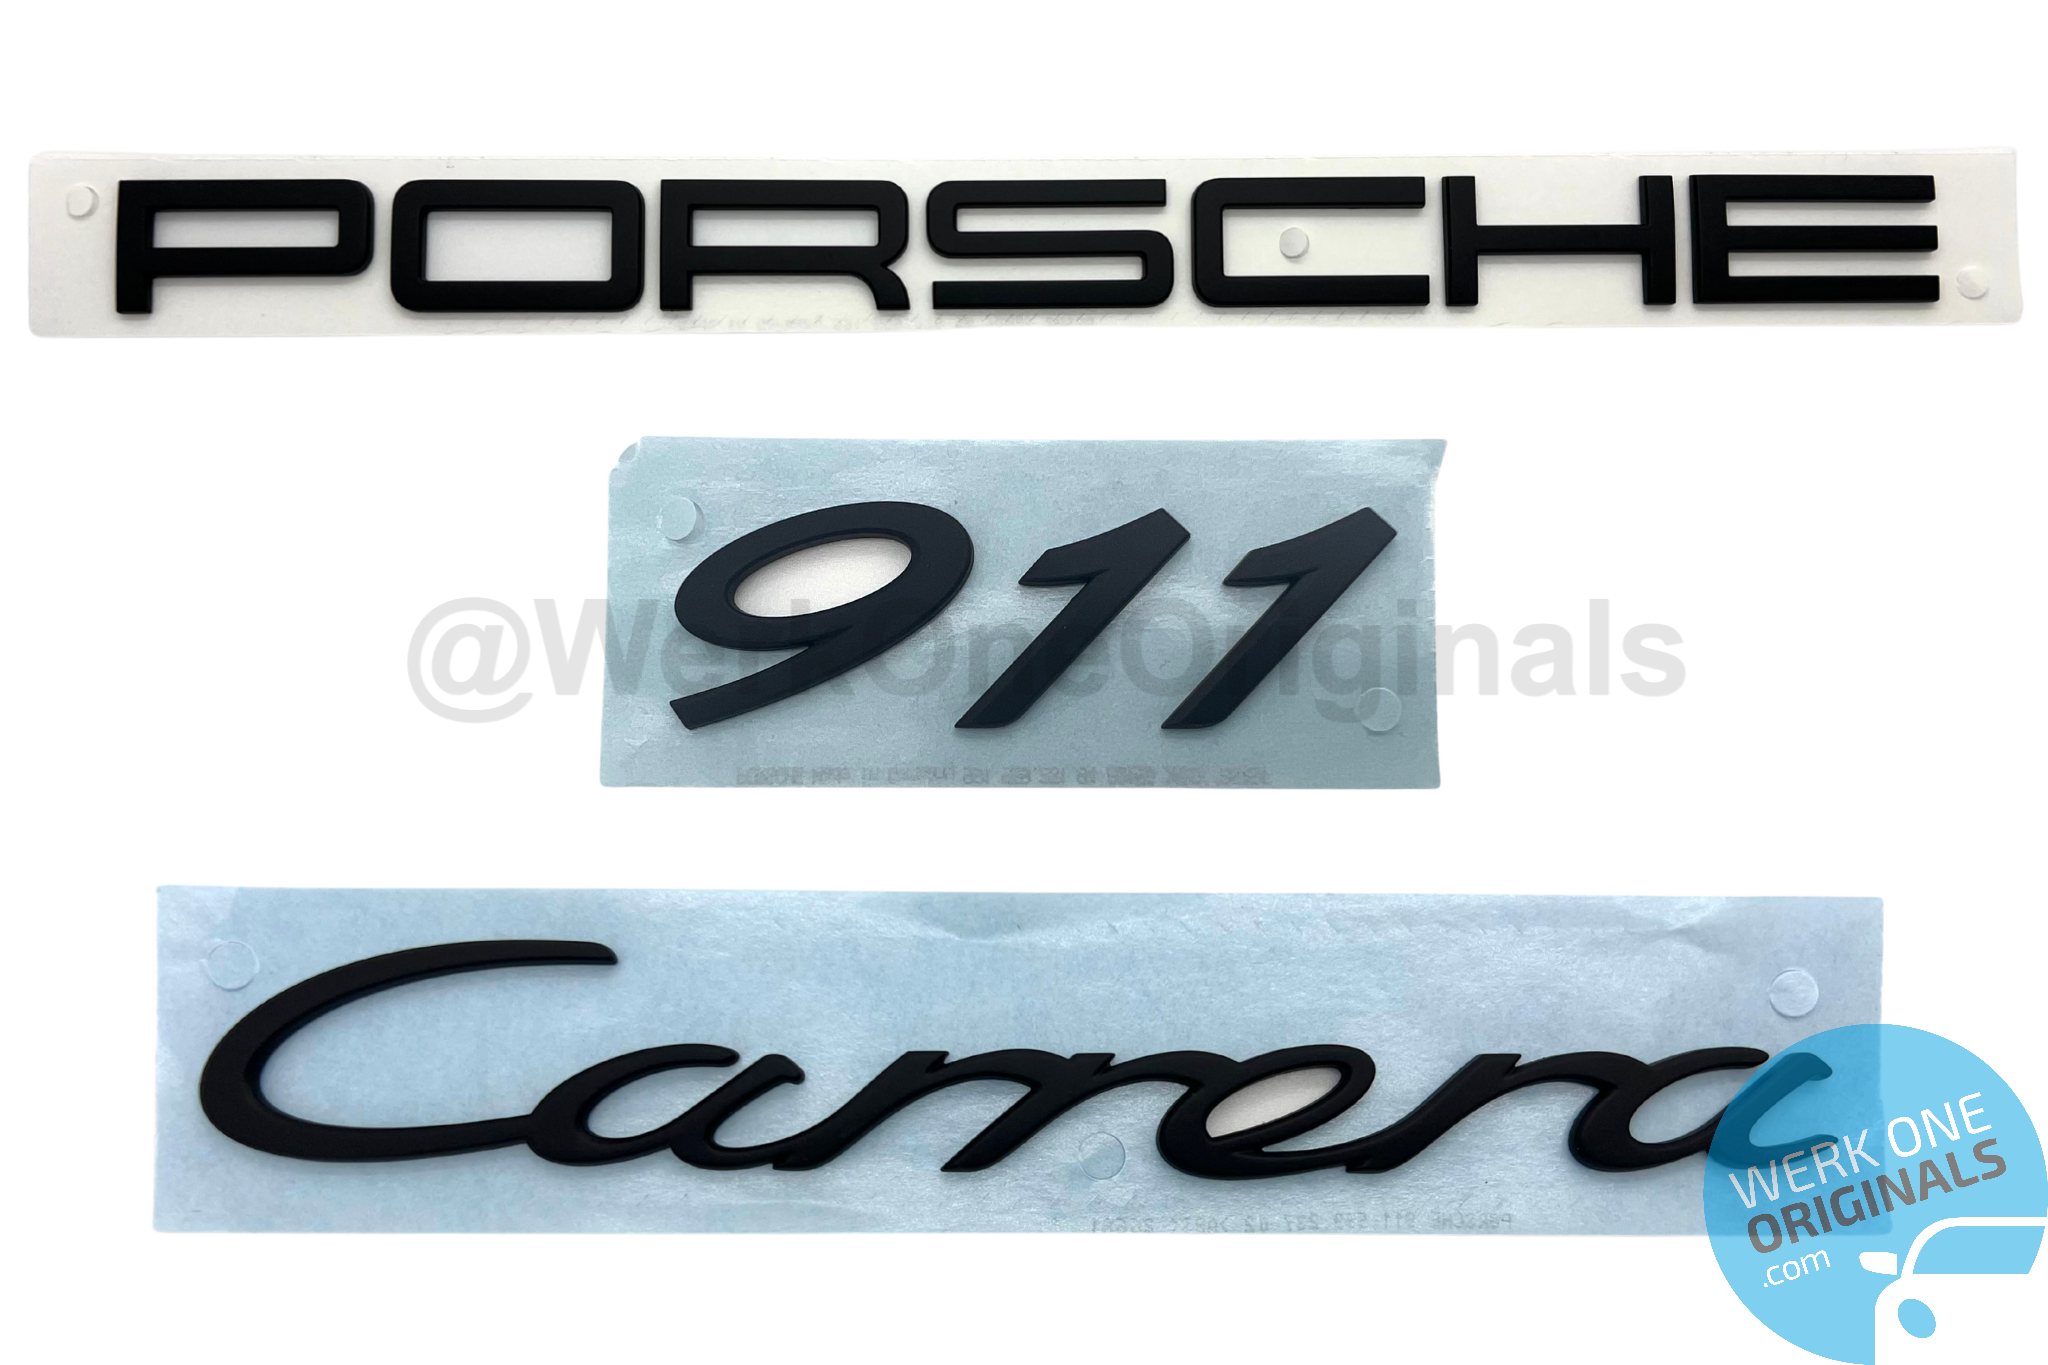 Official 'Porsche 911 Carrera' Rear Badge Decal in Matte Black for 911 Type 991 Carrera Models